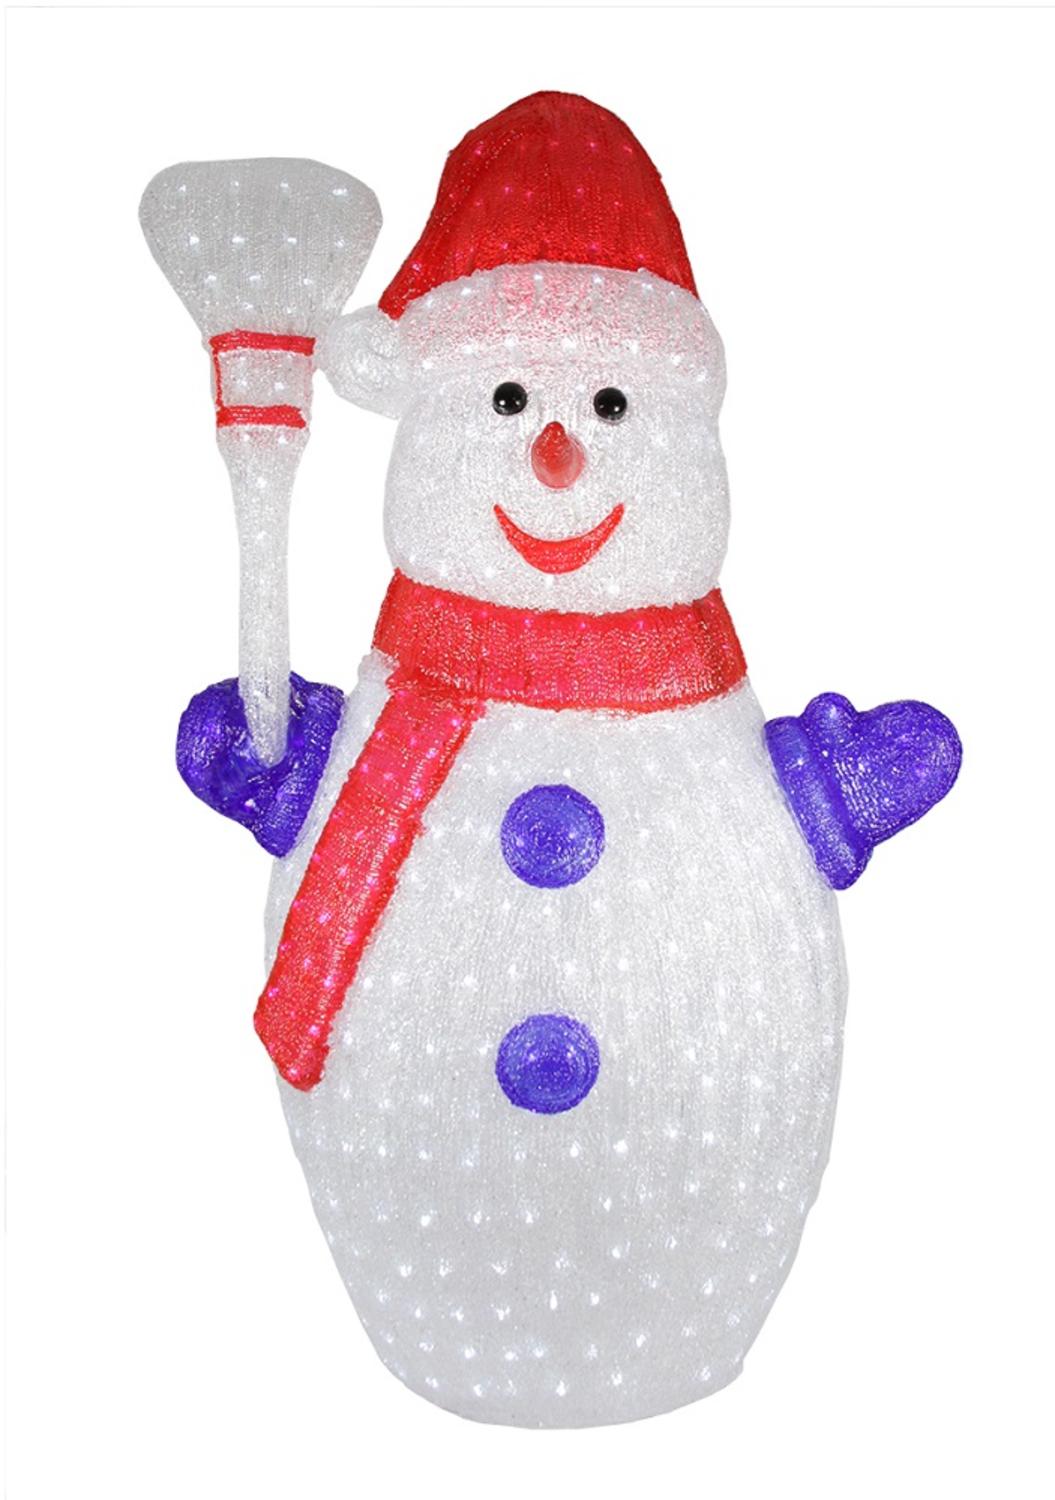 4' Pre-lit Commercial Grade Acrylic Snowman Christmas Outdoor Decoration - Polar White LED Lights